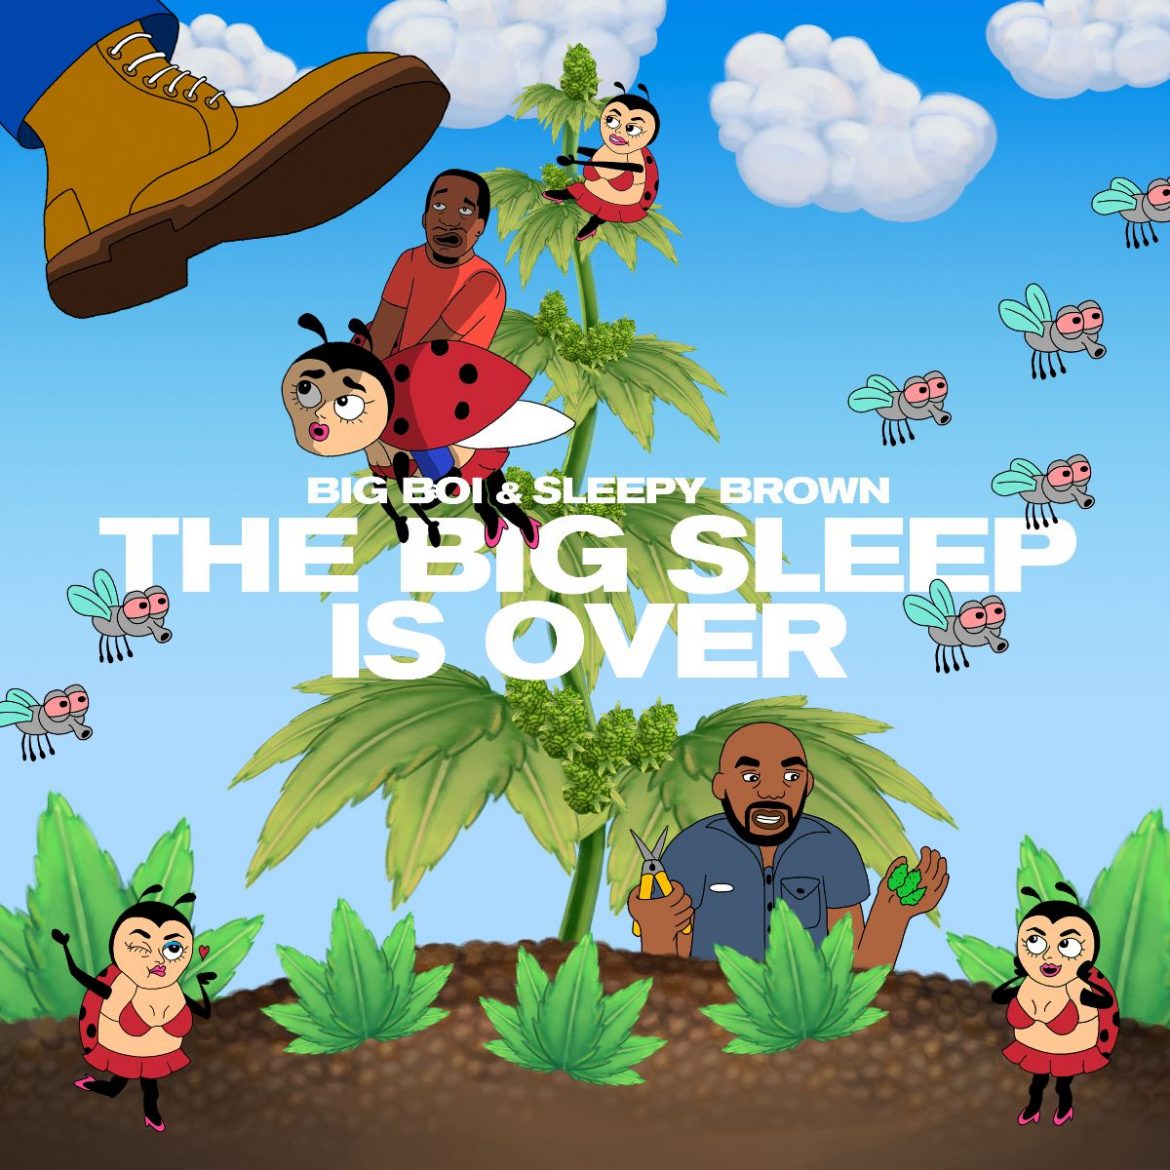 Big Boi & Sleepy Brown Announce Joint LP Release Date, Drop “The Big Sleep Is Over” Single